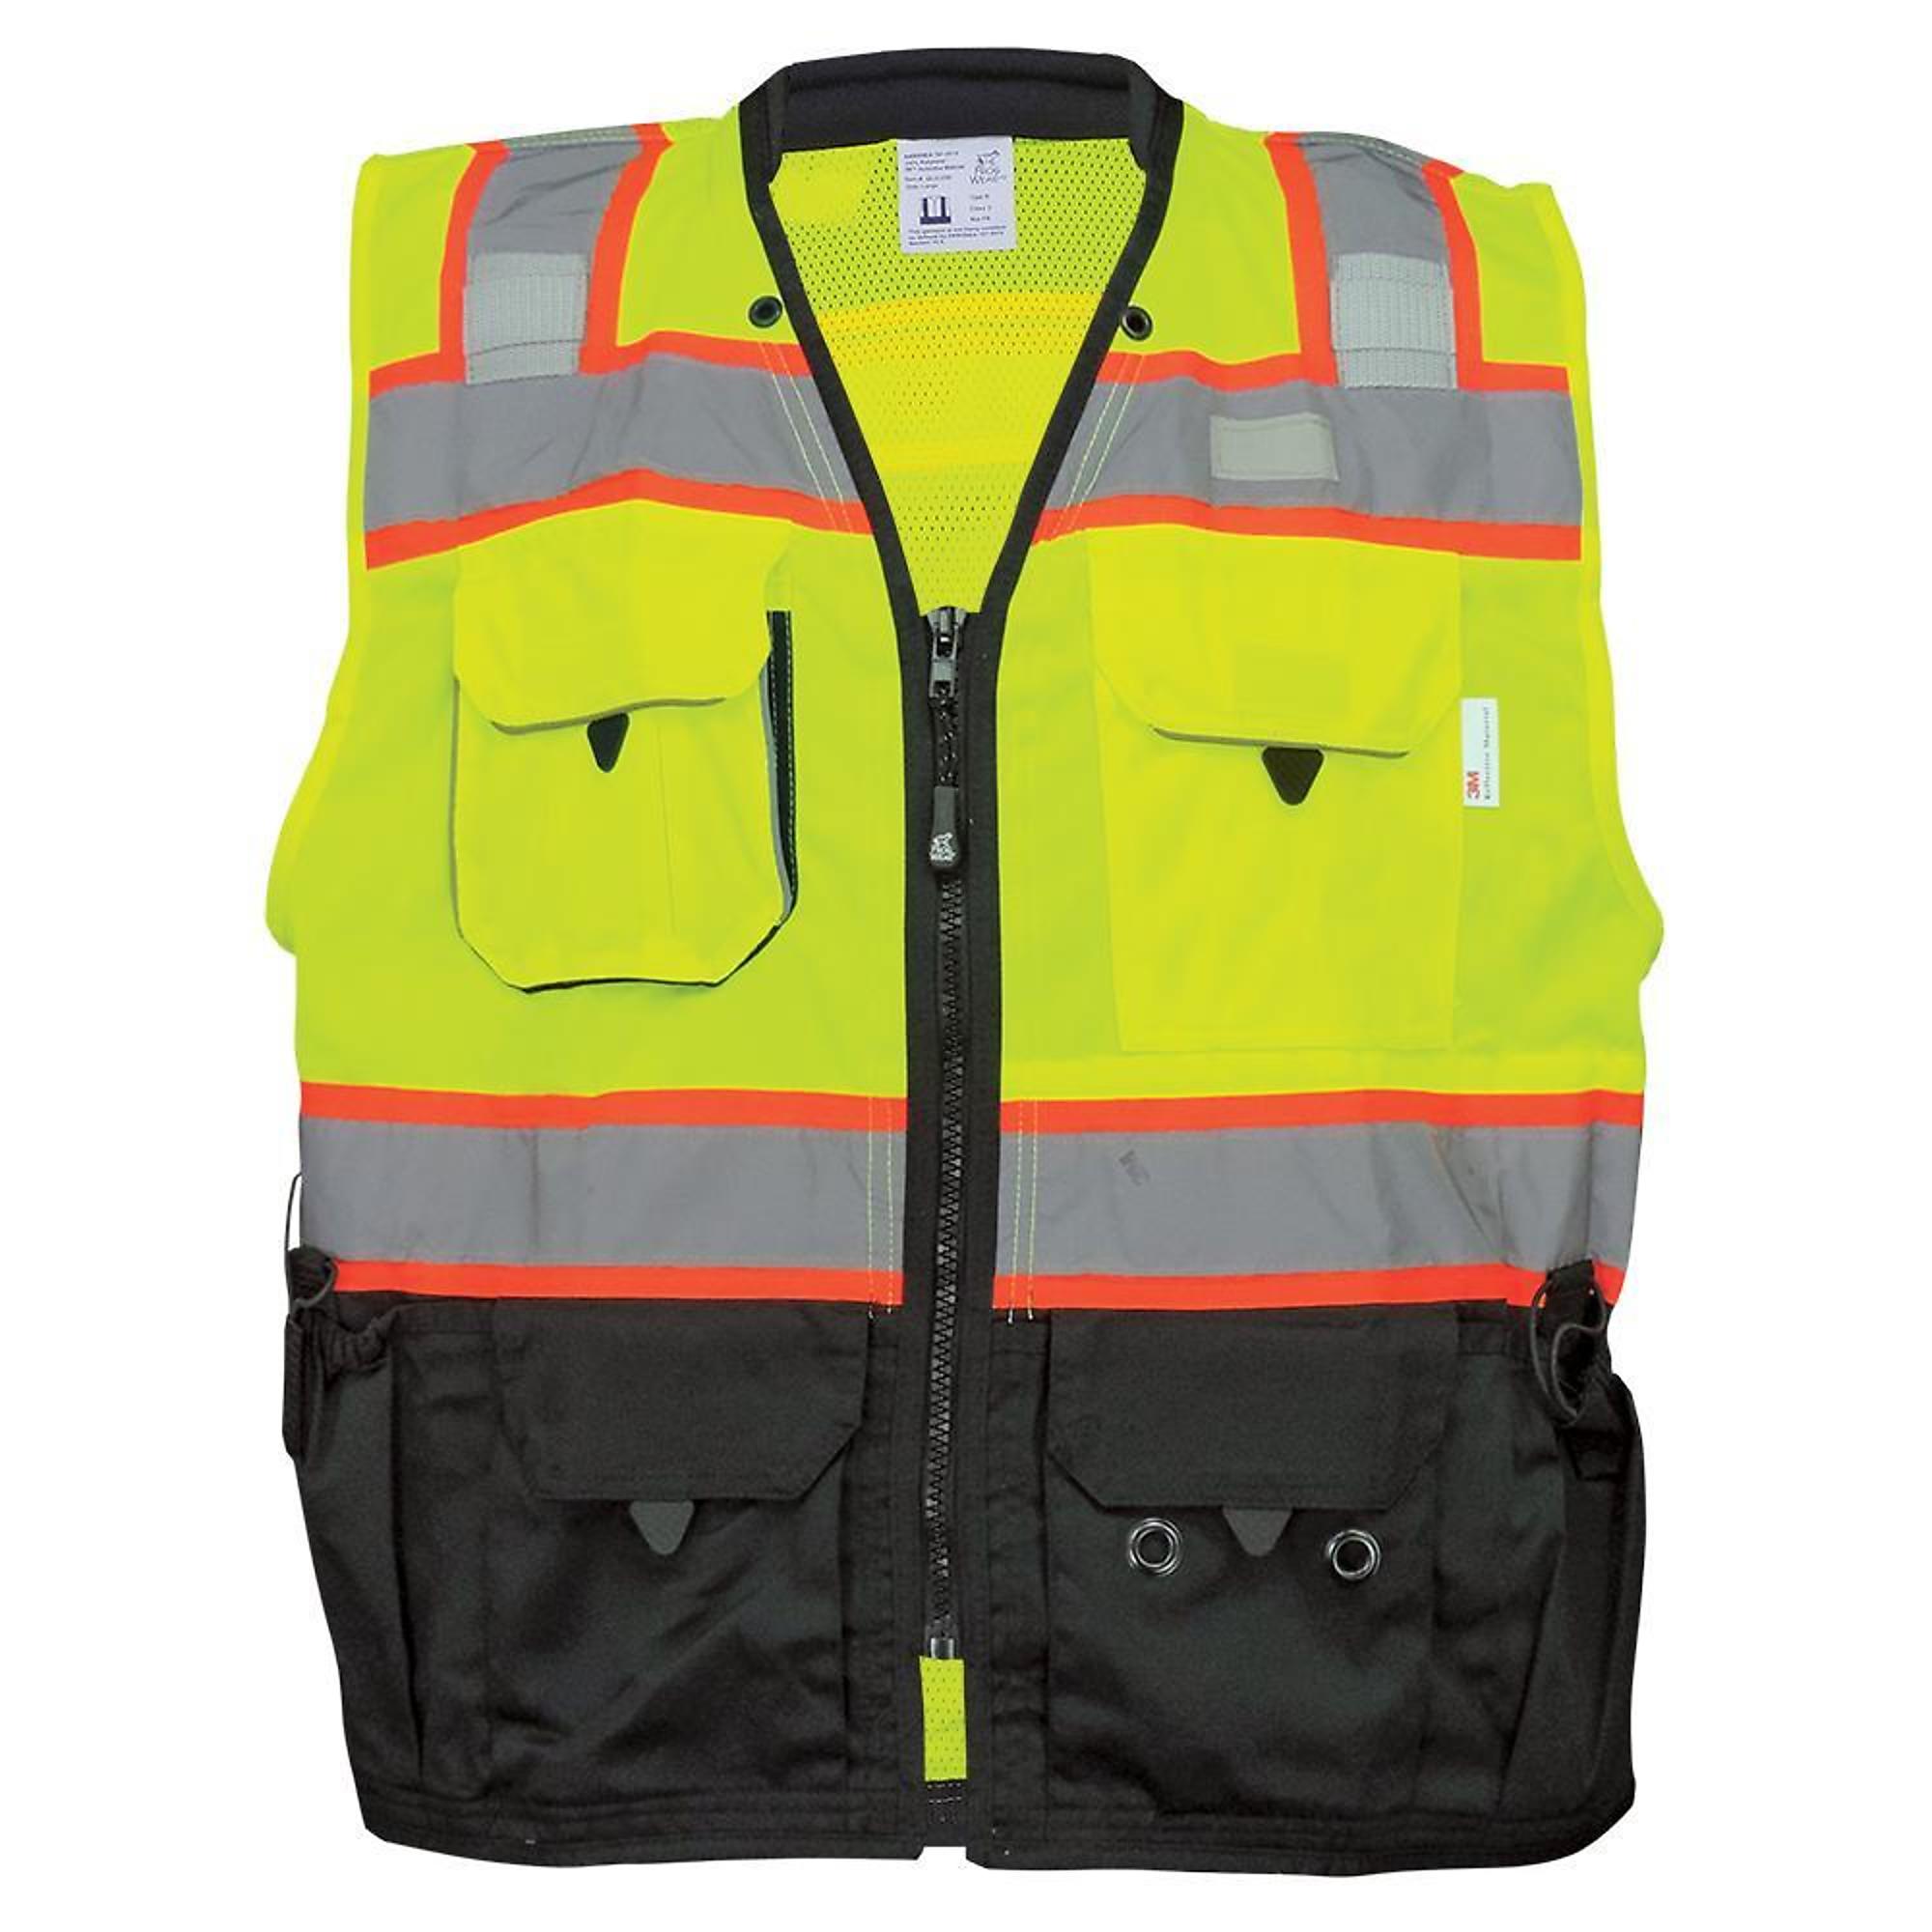 FrogWear Surveyors Safety Vest, 4XL, Yellow/Green, Model GLO-099-4XL